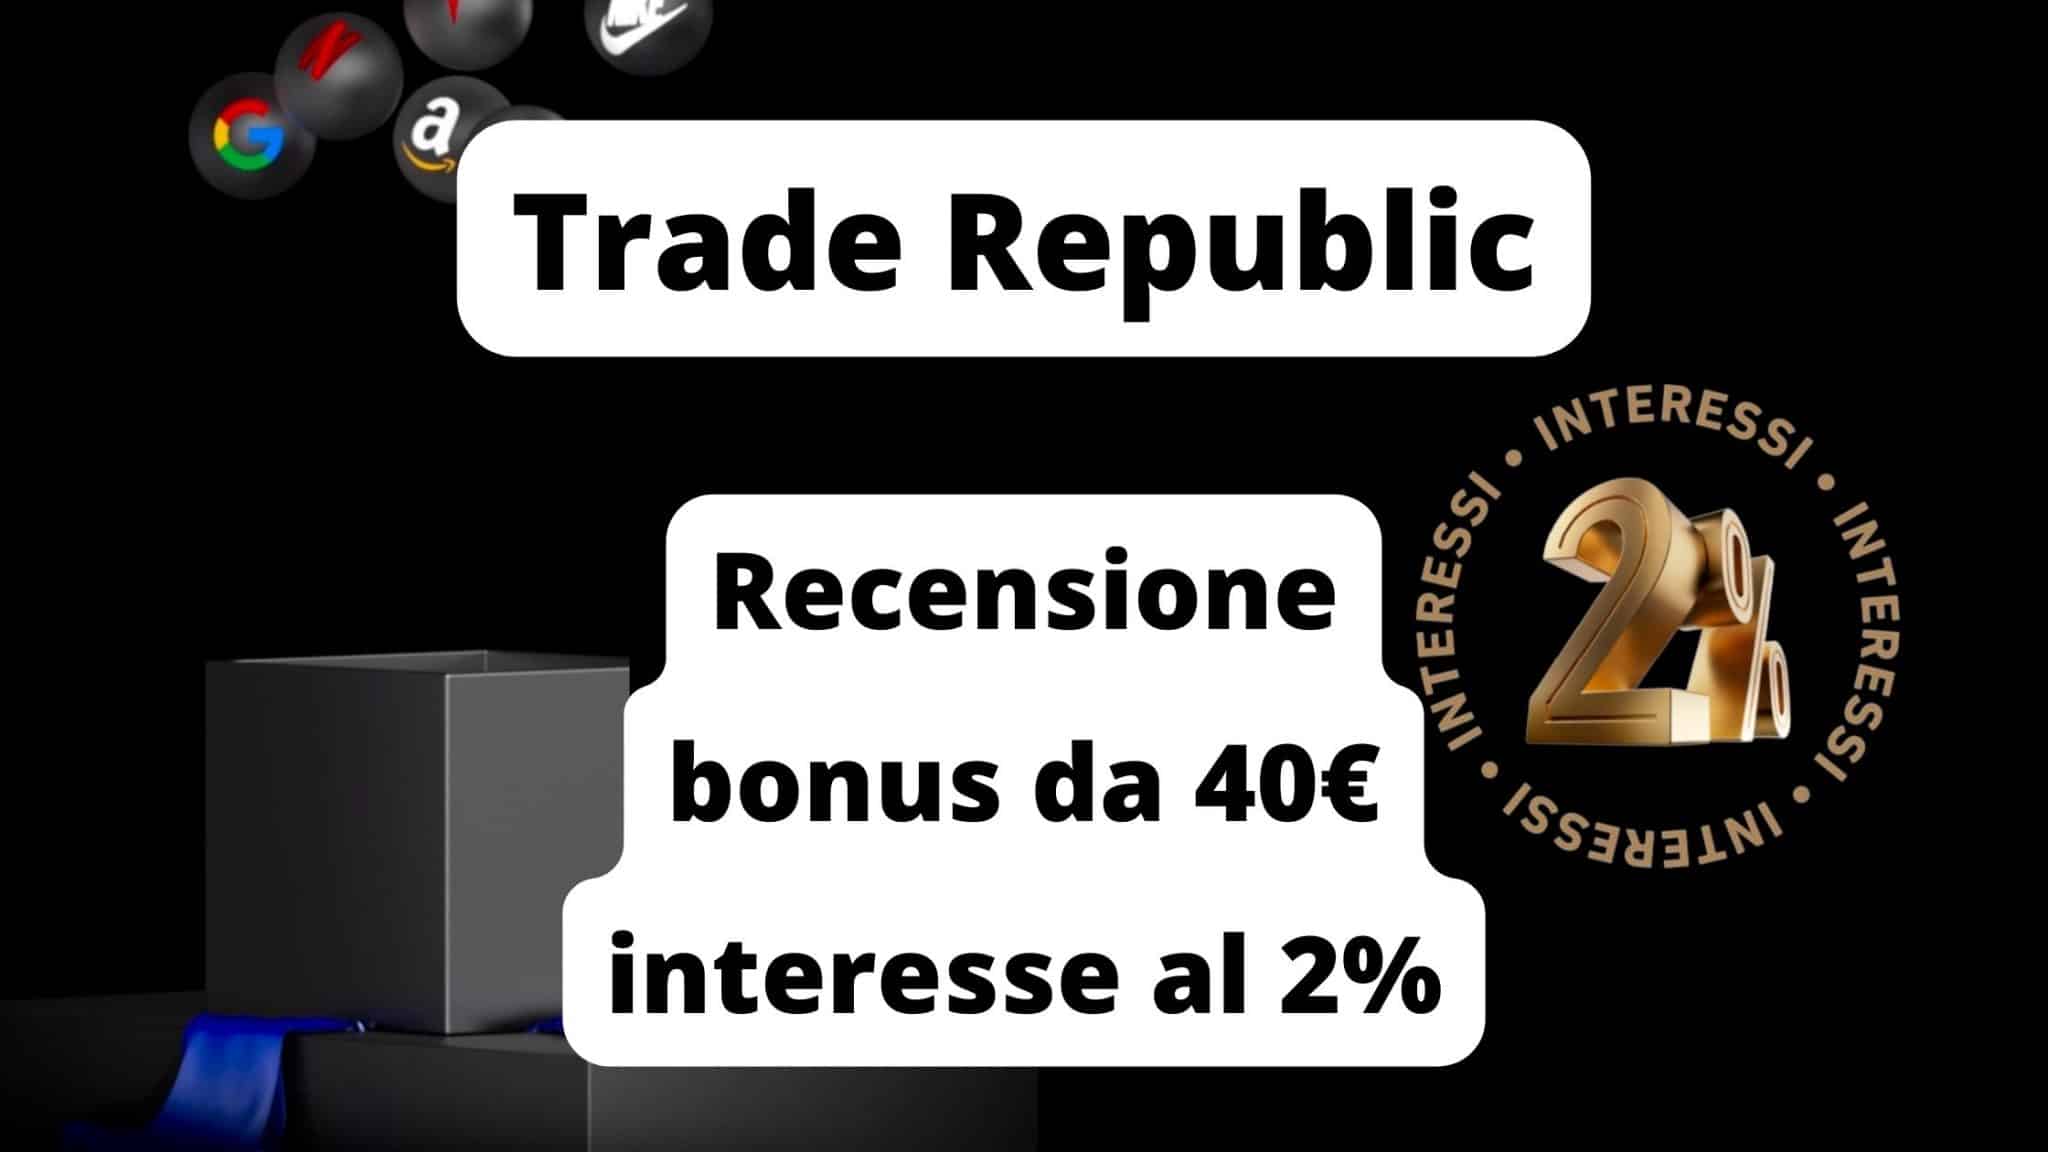 Trade Republic Recensione